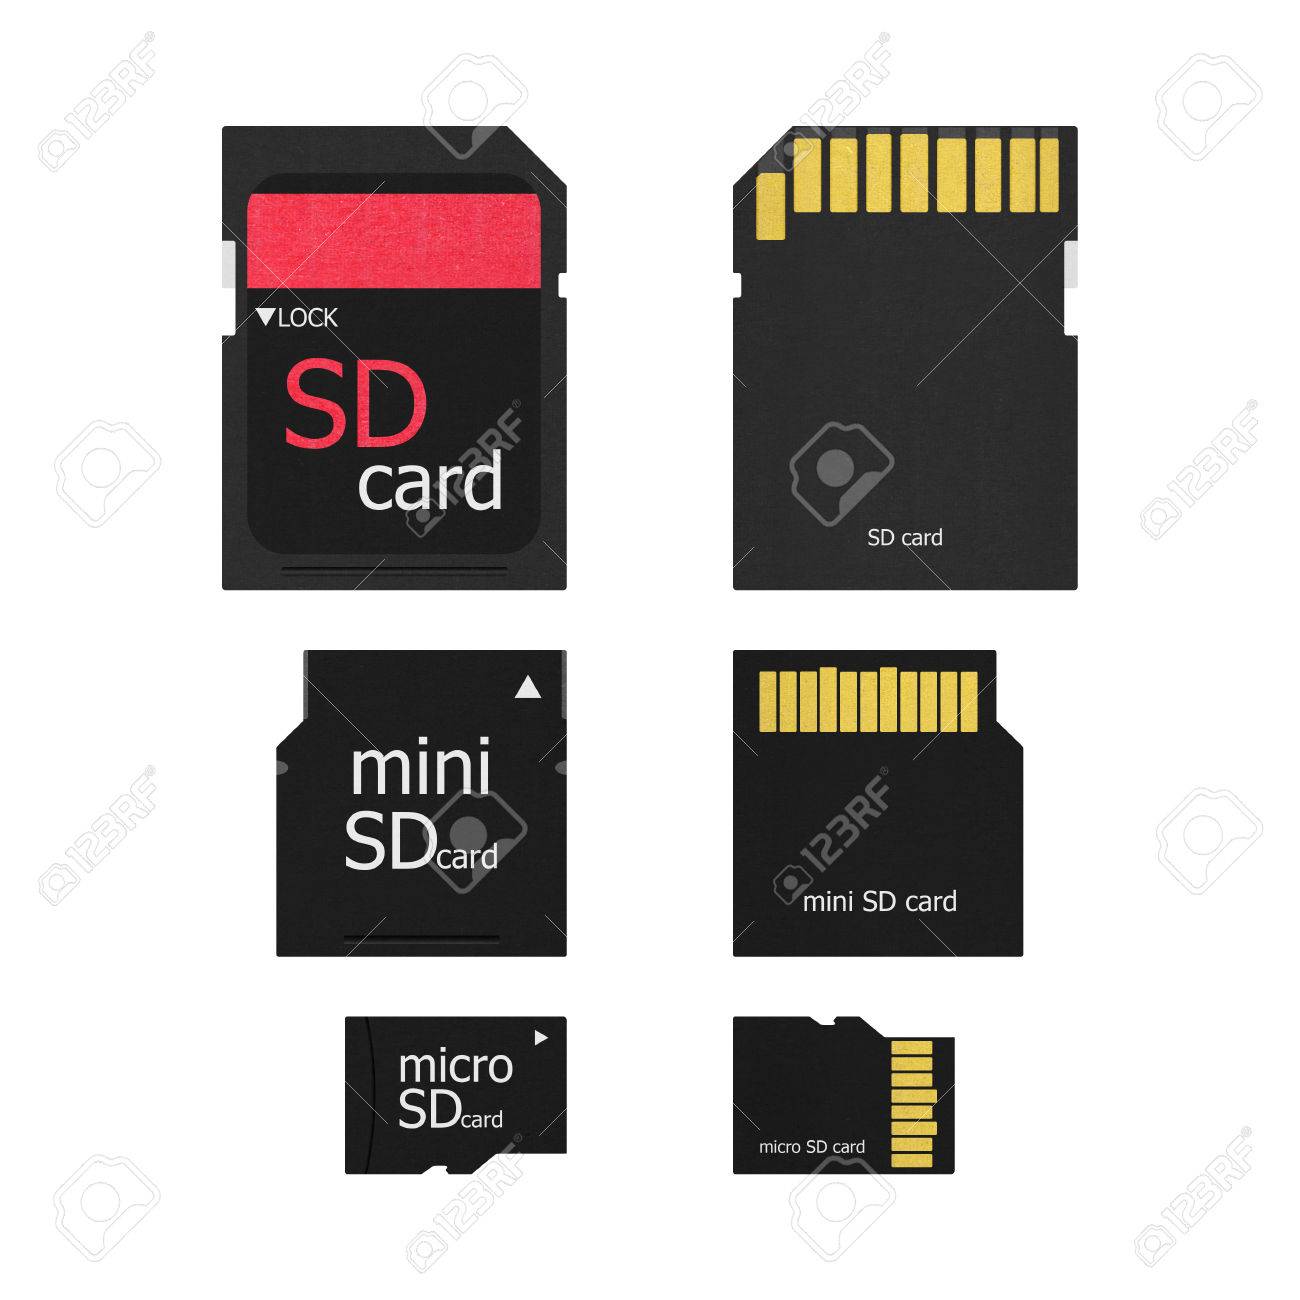 How to Repair a Damaged SD Card?